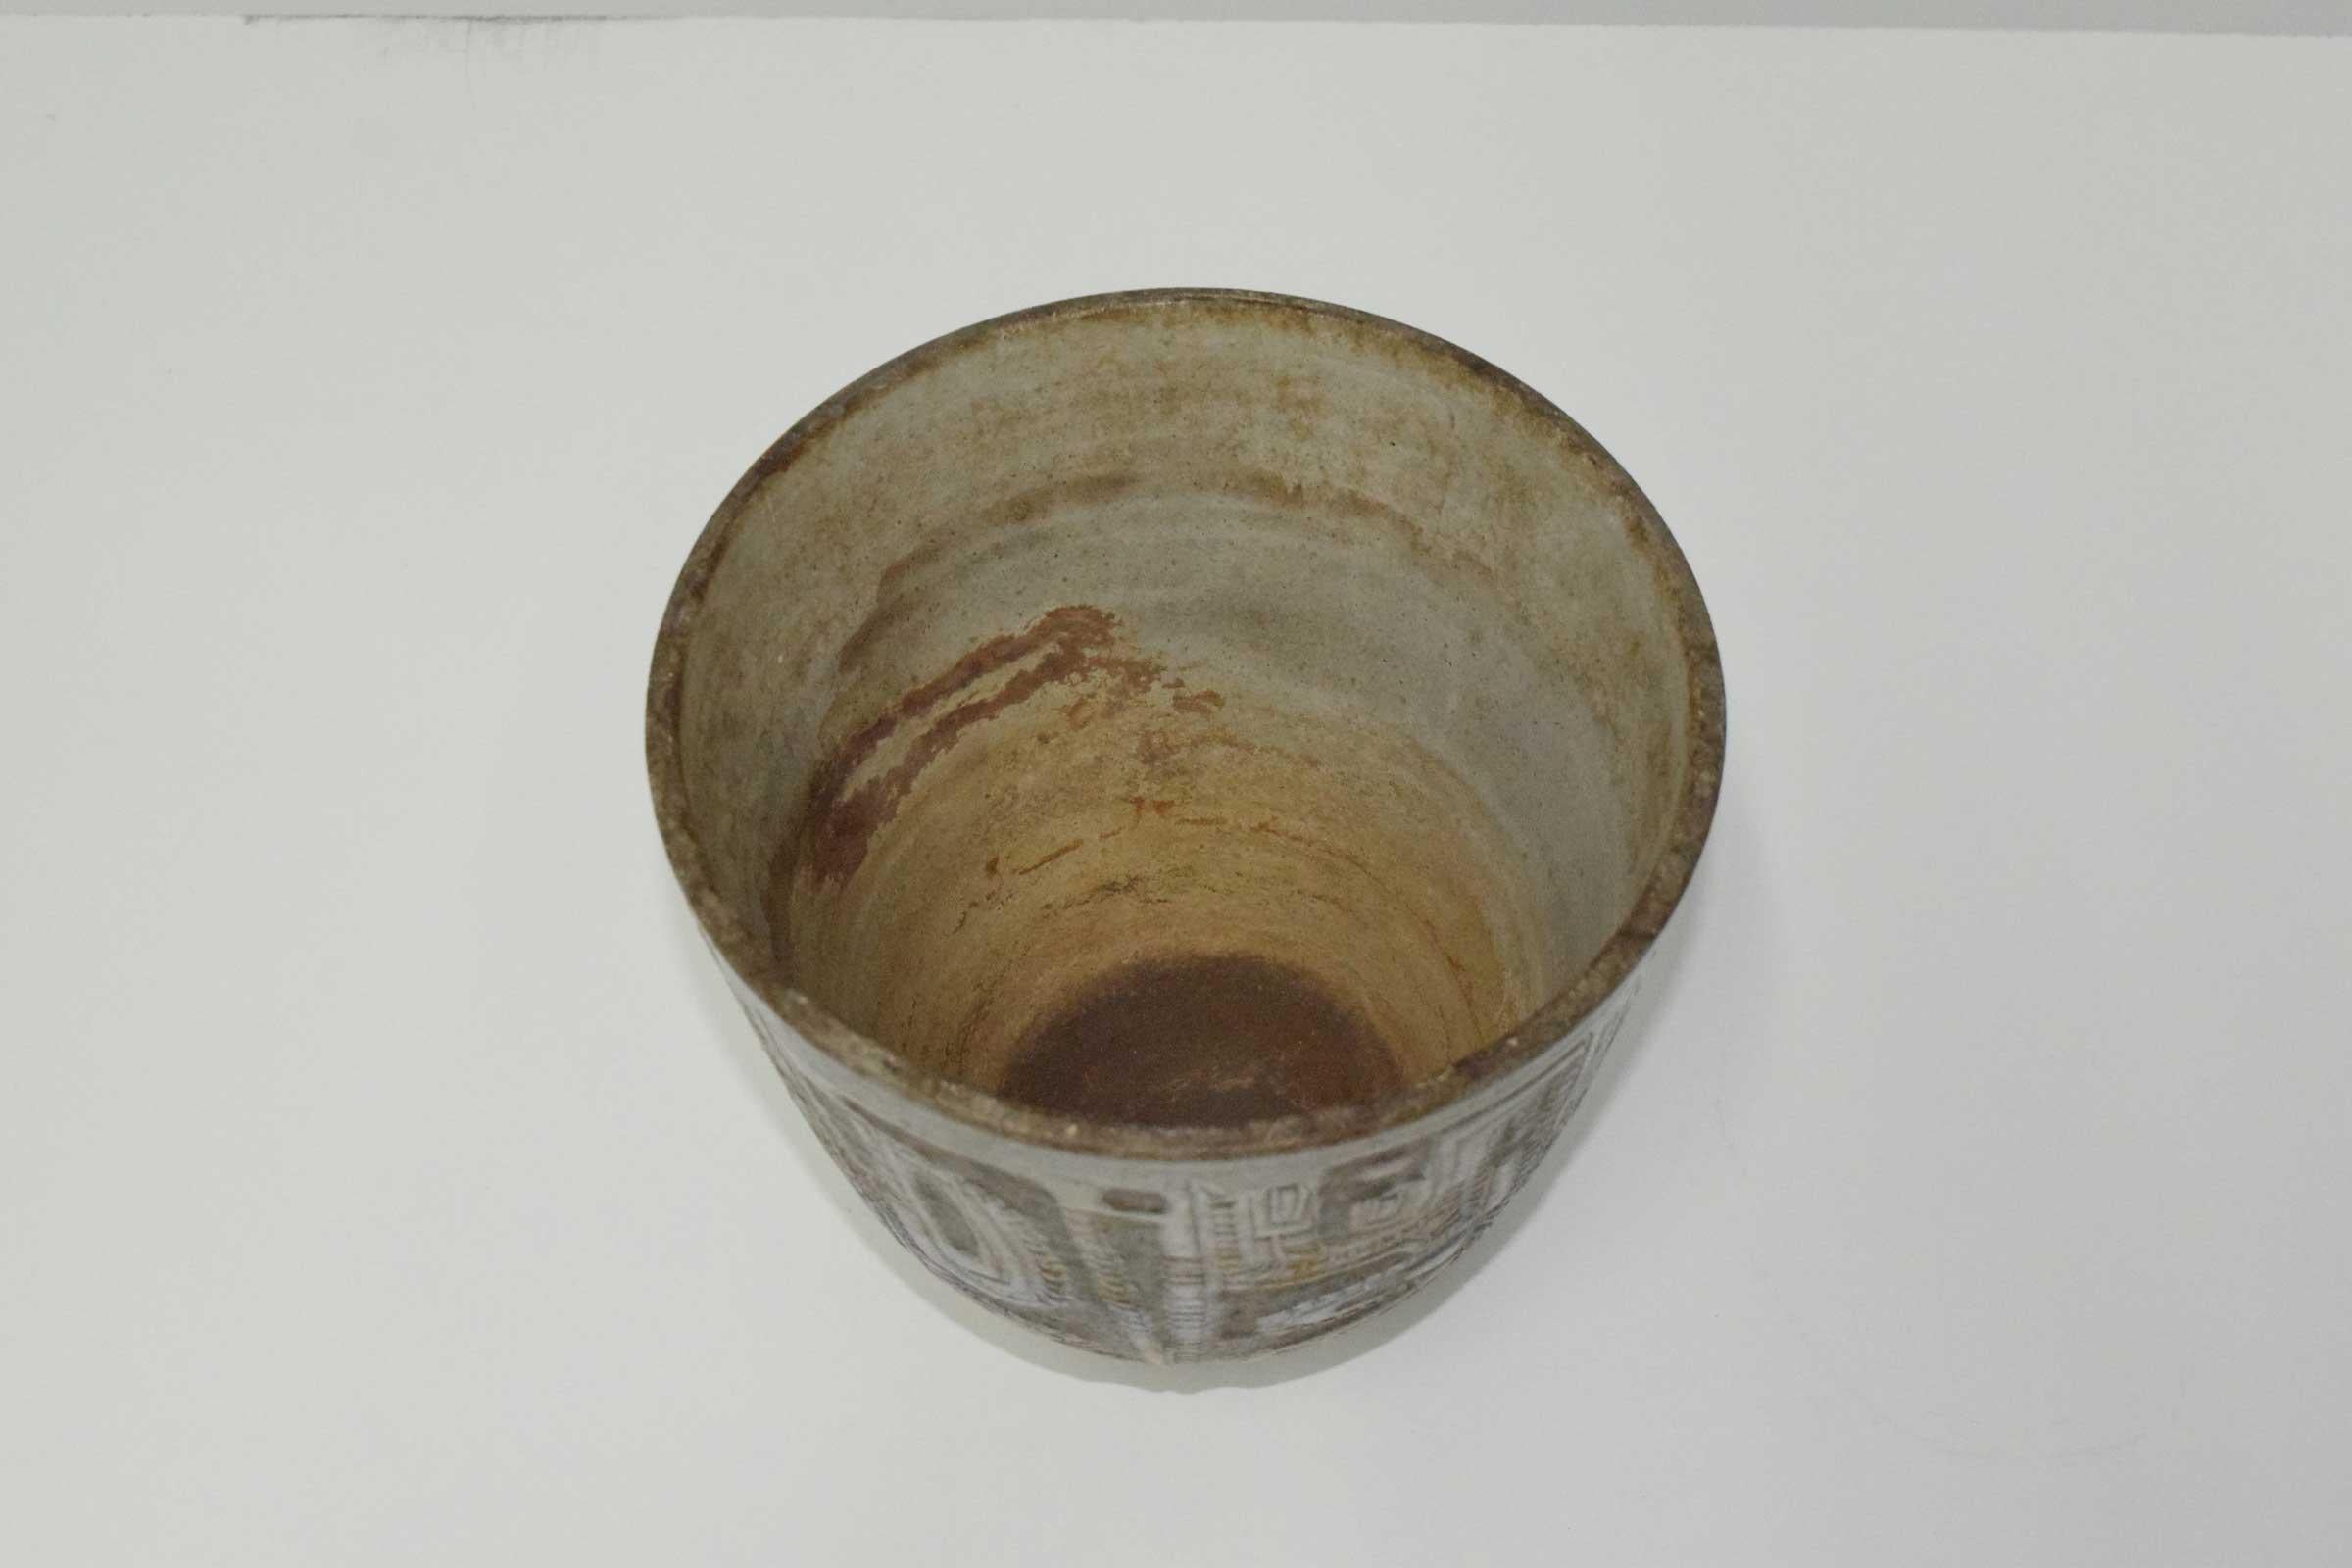 20th Century Clyde Burt Ceramic Vase or Vessel with Sgraffito